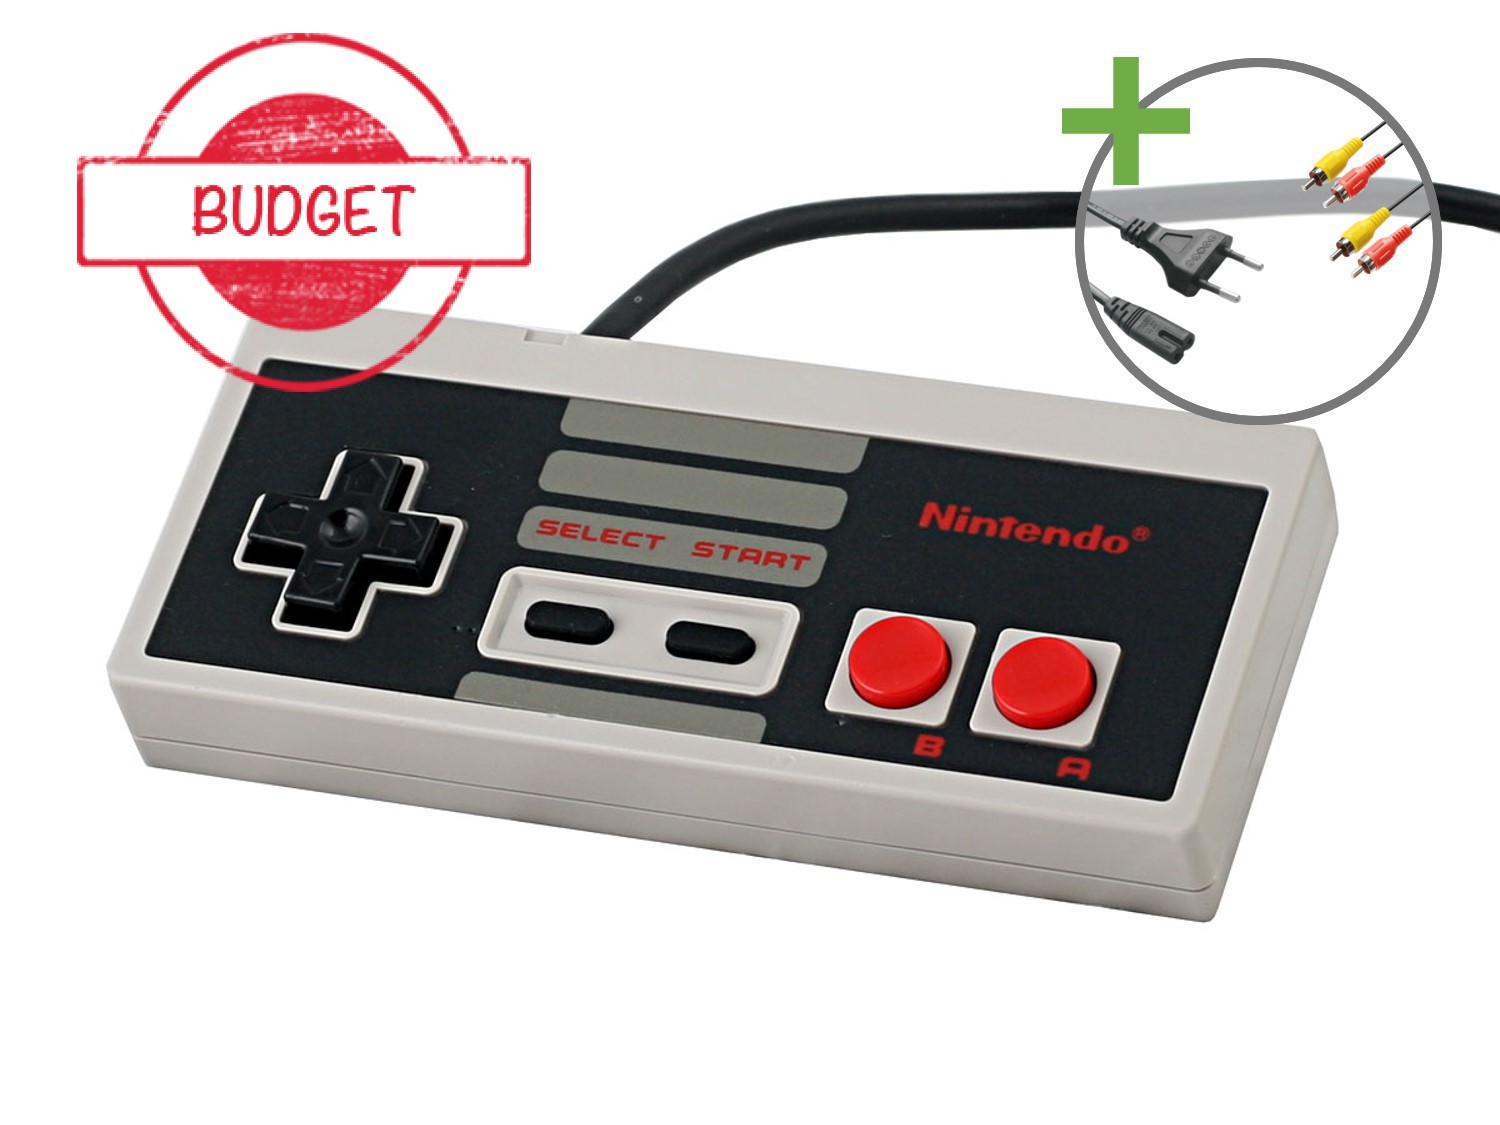 Nintendo NES Starter Pack - Super Mario Bros. 3 Control Deck Edition - Budget - Nintendo NES Hardware - 4